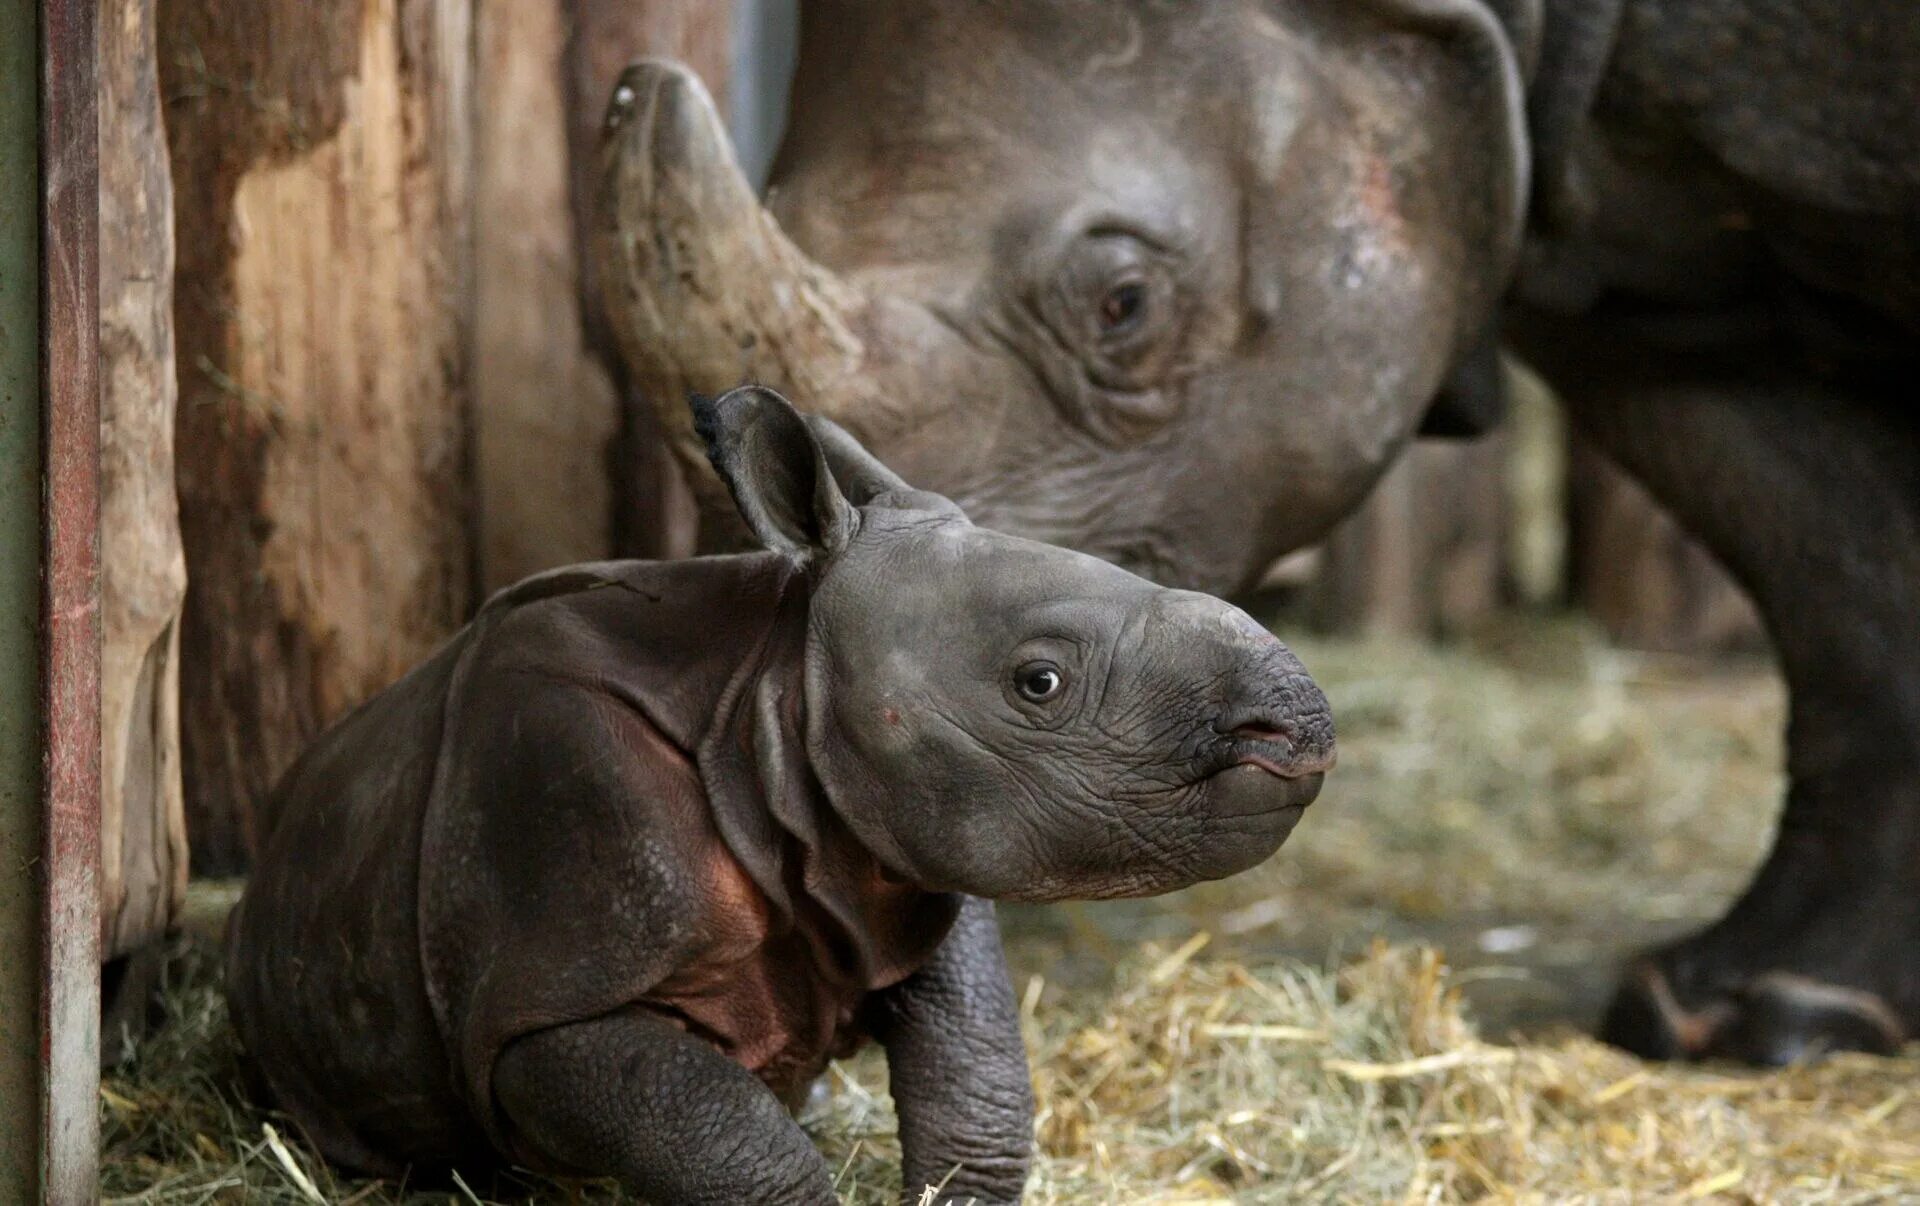 Суматранский носорог. Суматранский носорог детеныш. Новорожденные носороги. Детеныш носорога. Сколько детенышей носорога родилось в 2001 году